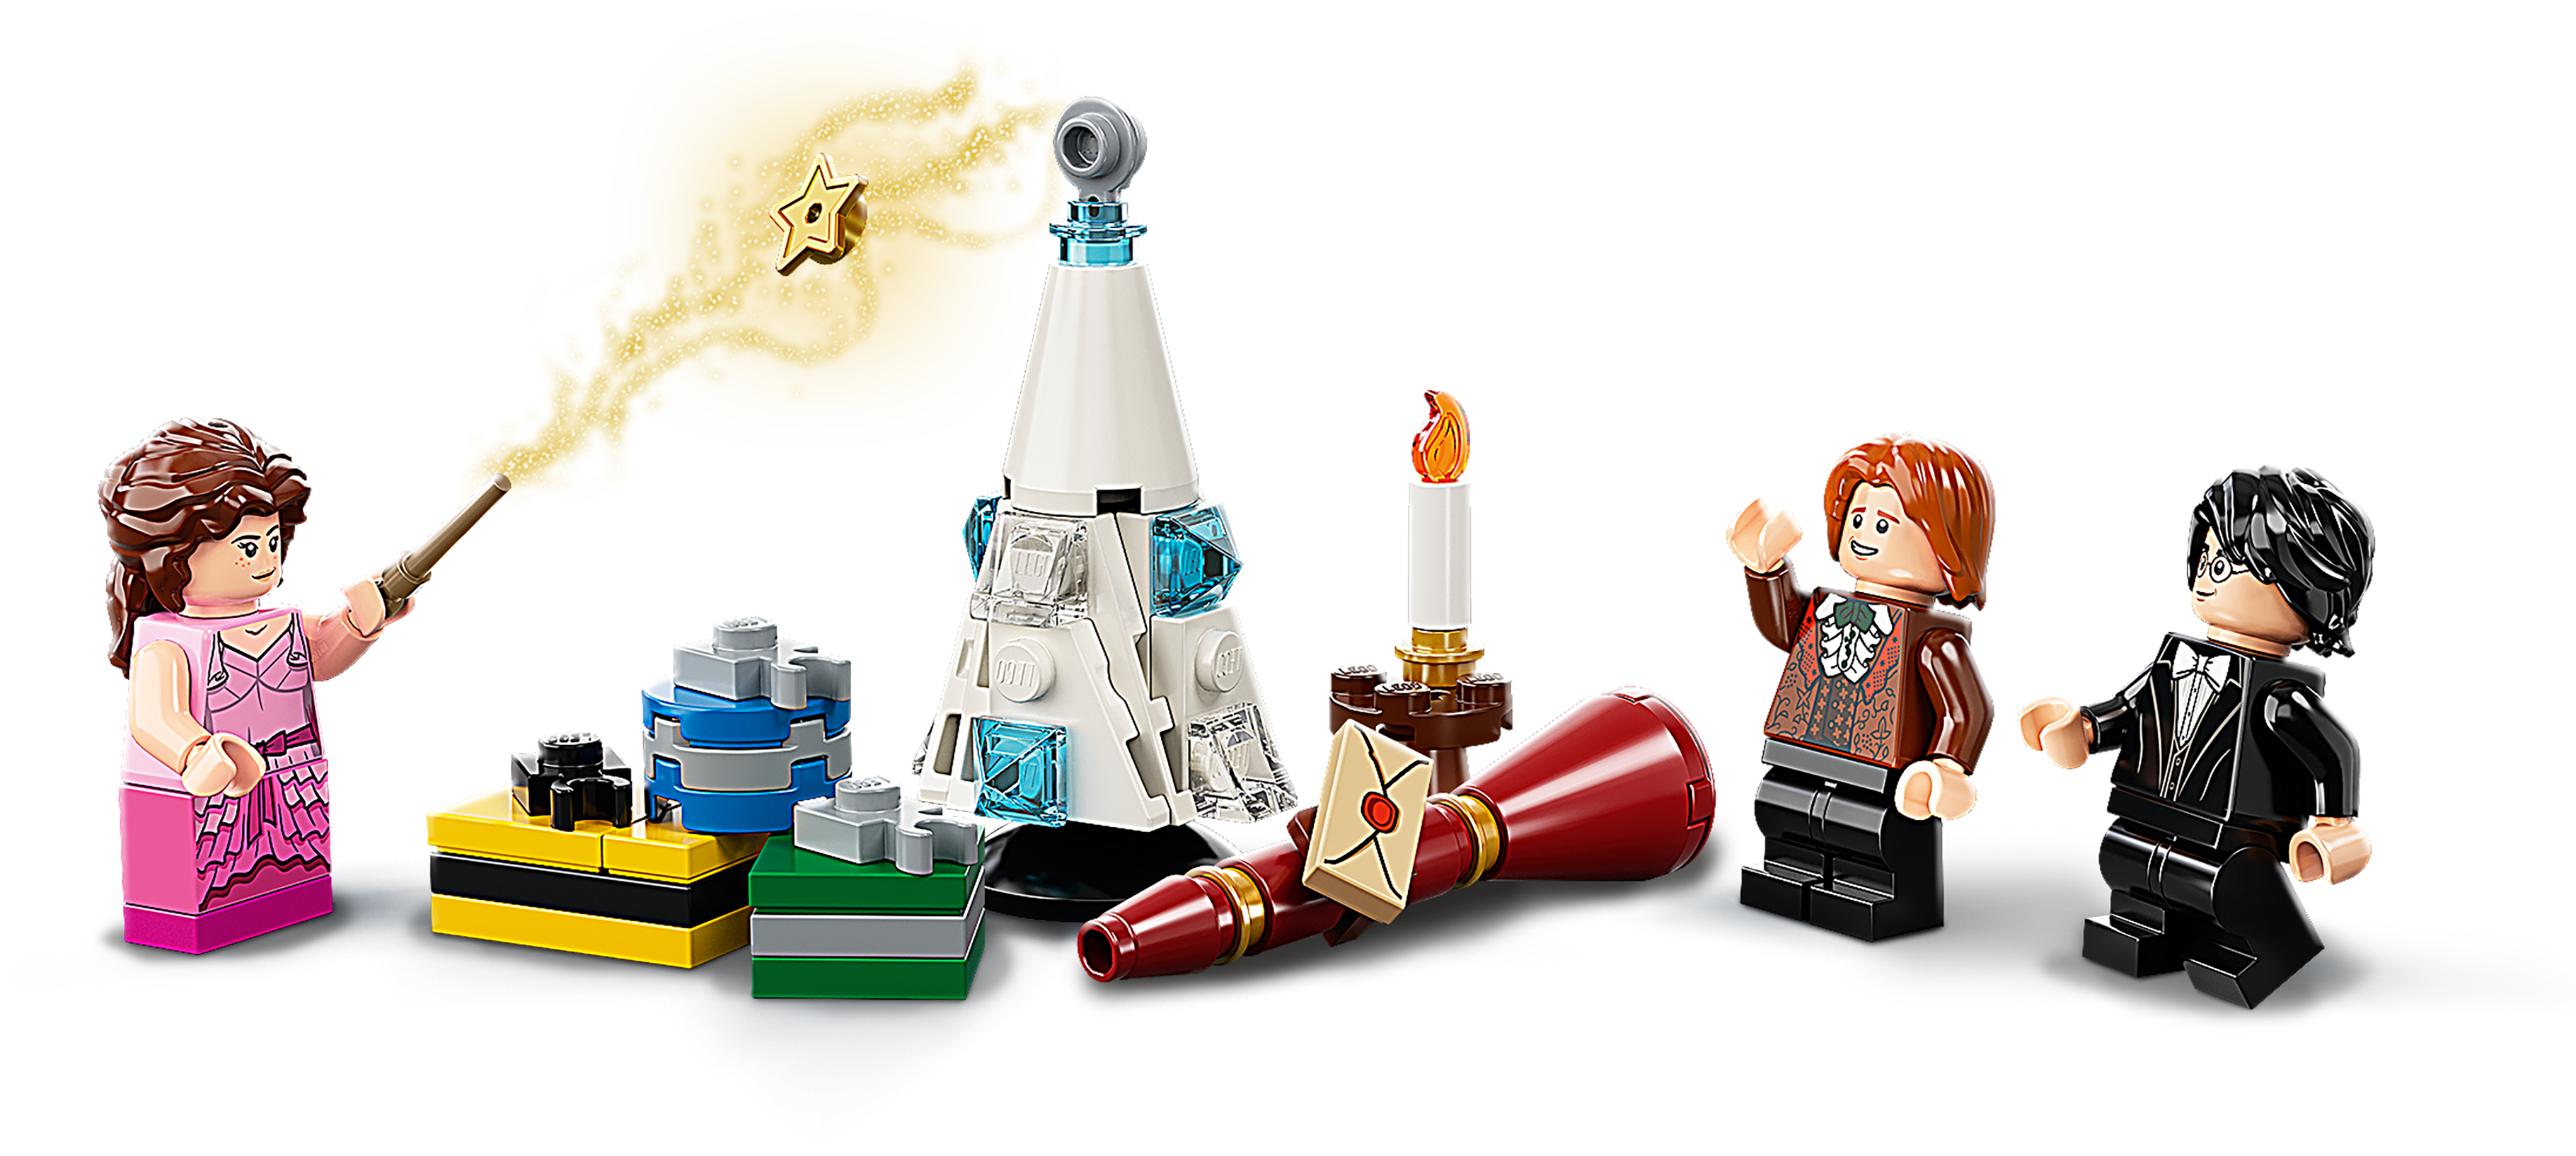 LEGO NEW Minifigure Hermione Granger 75981 Harry Potter Minifigures